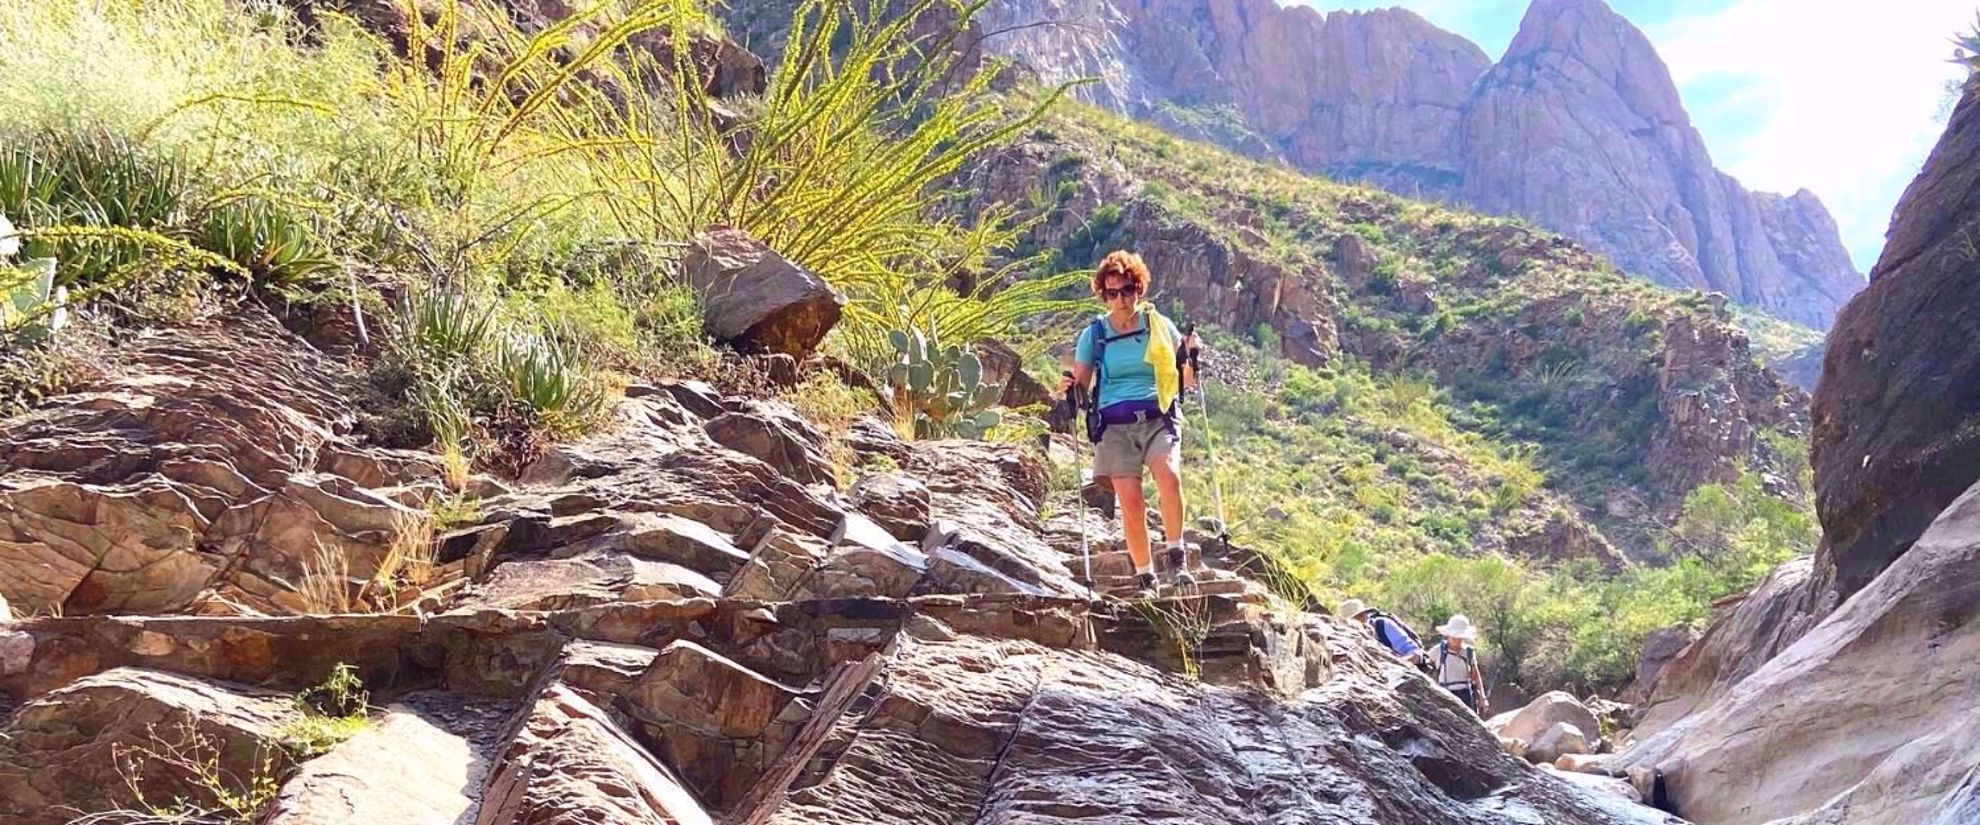 women's hiking tour to big bend national park